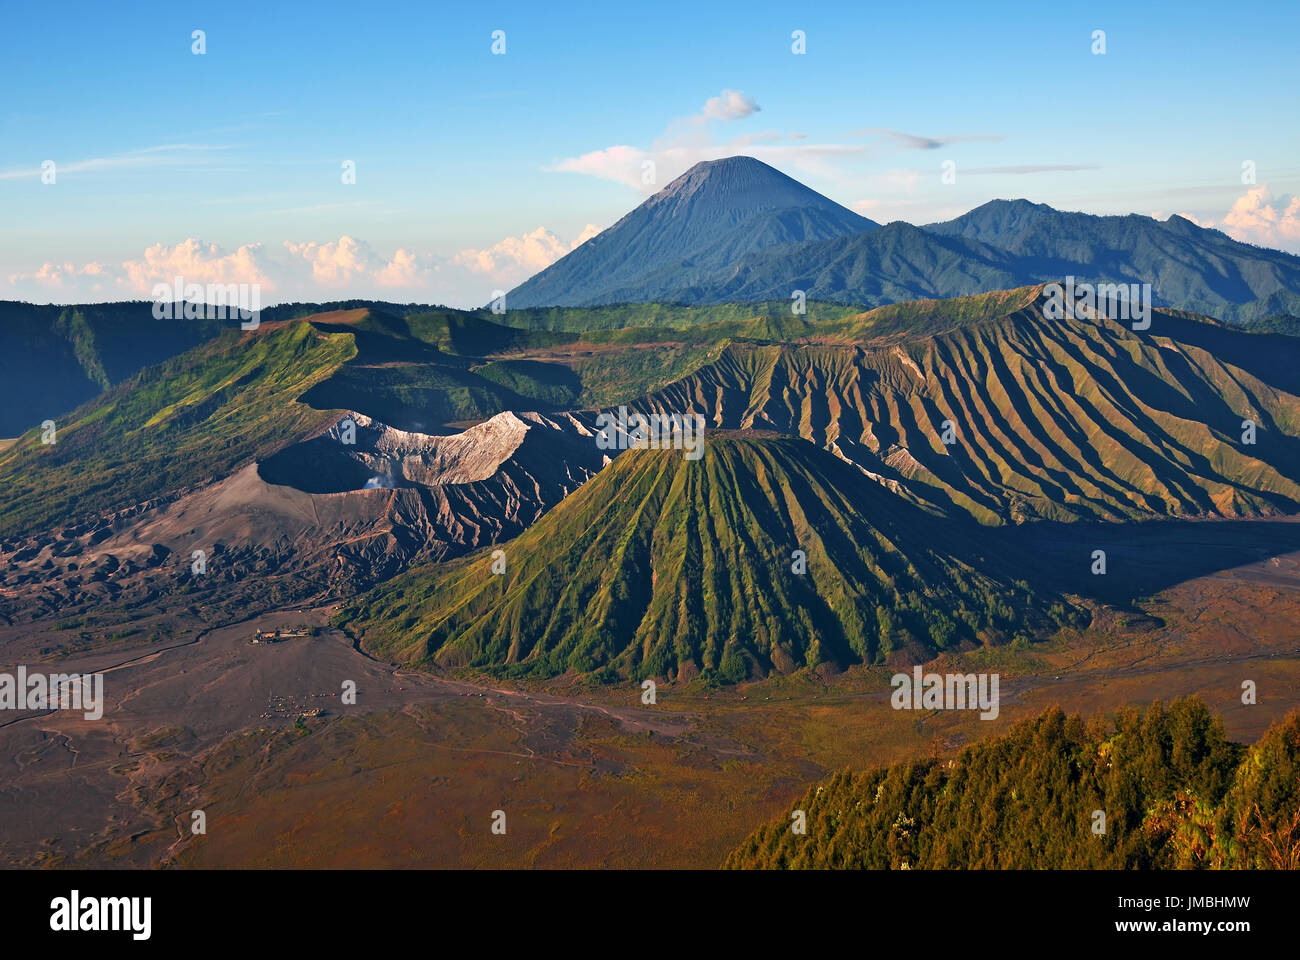 Mount Bromo, Tengger, Semeru national park in East Java, Indonesia. Stock Photo